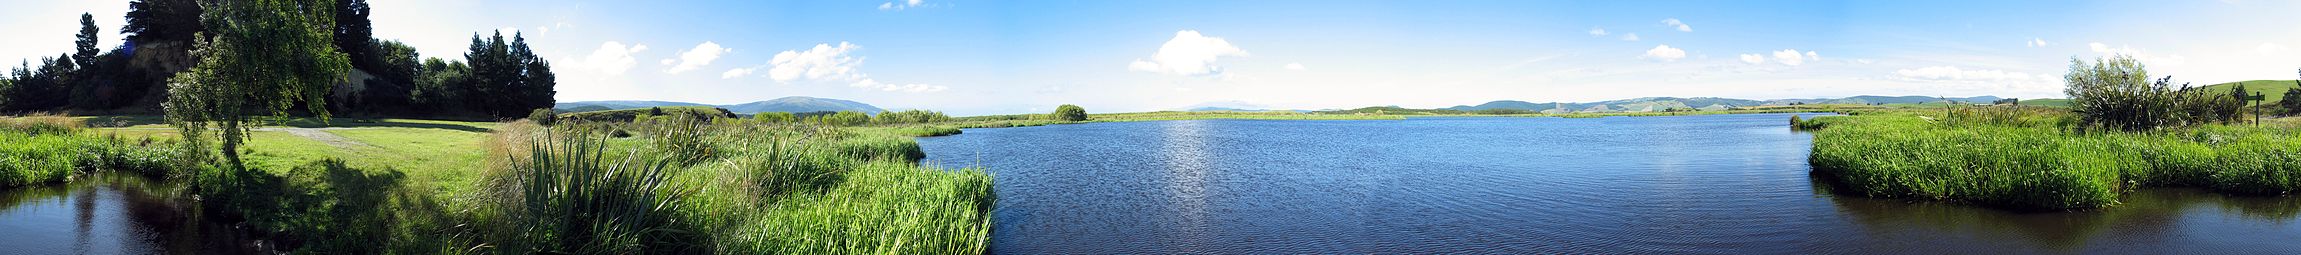 Panorama of a natural wetland (Sinclair Wetlands, New Zealand)